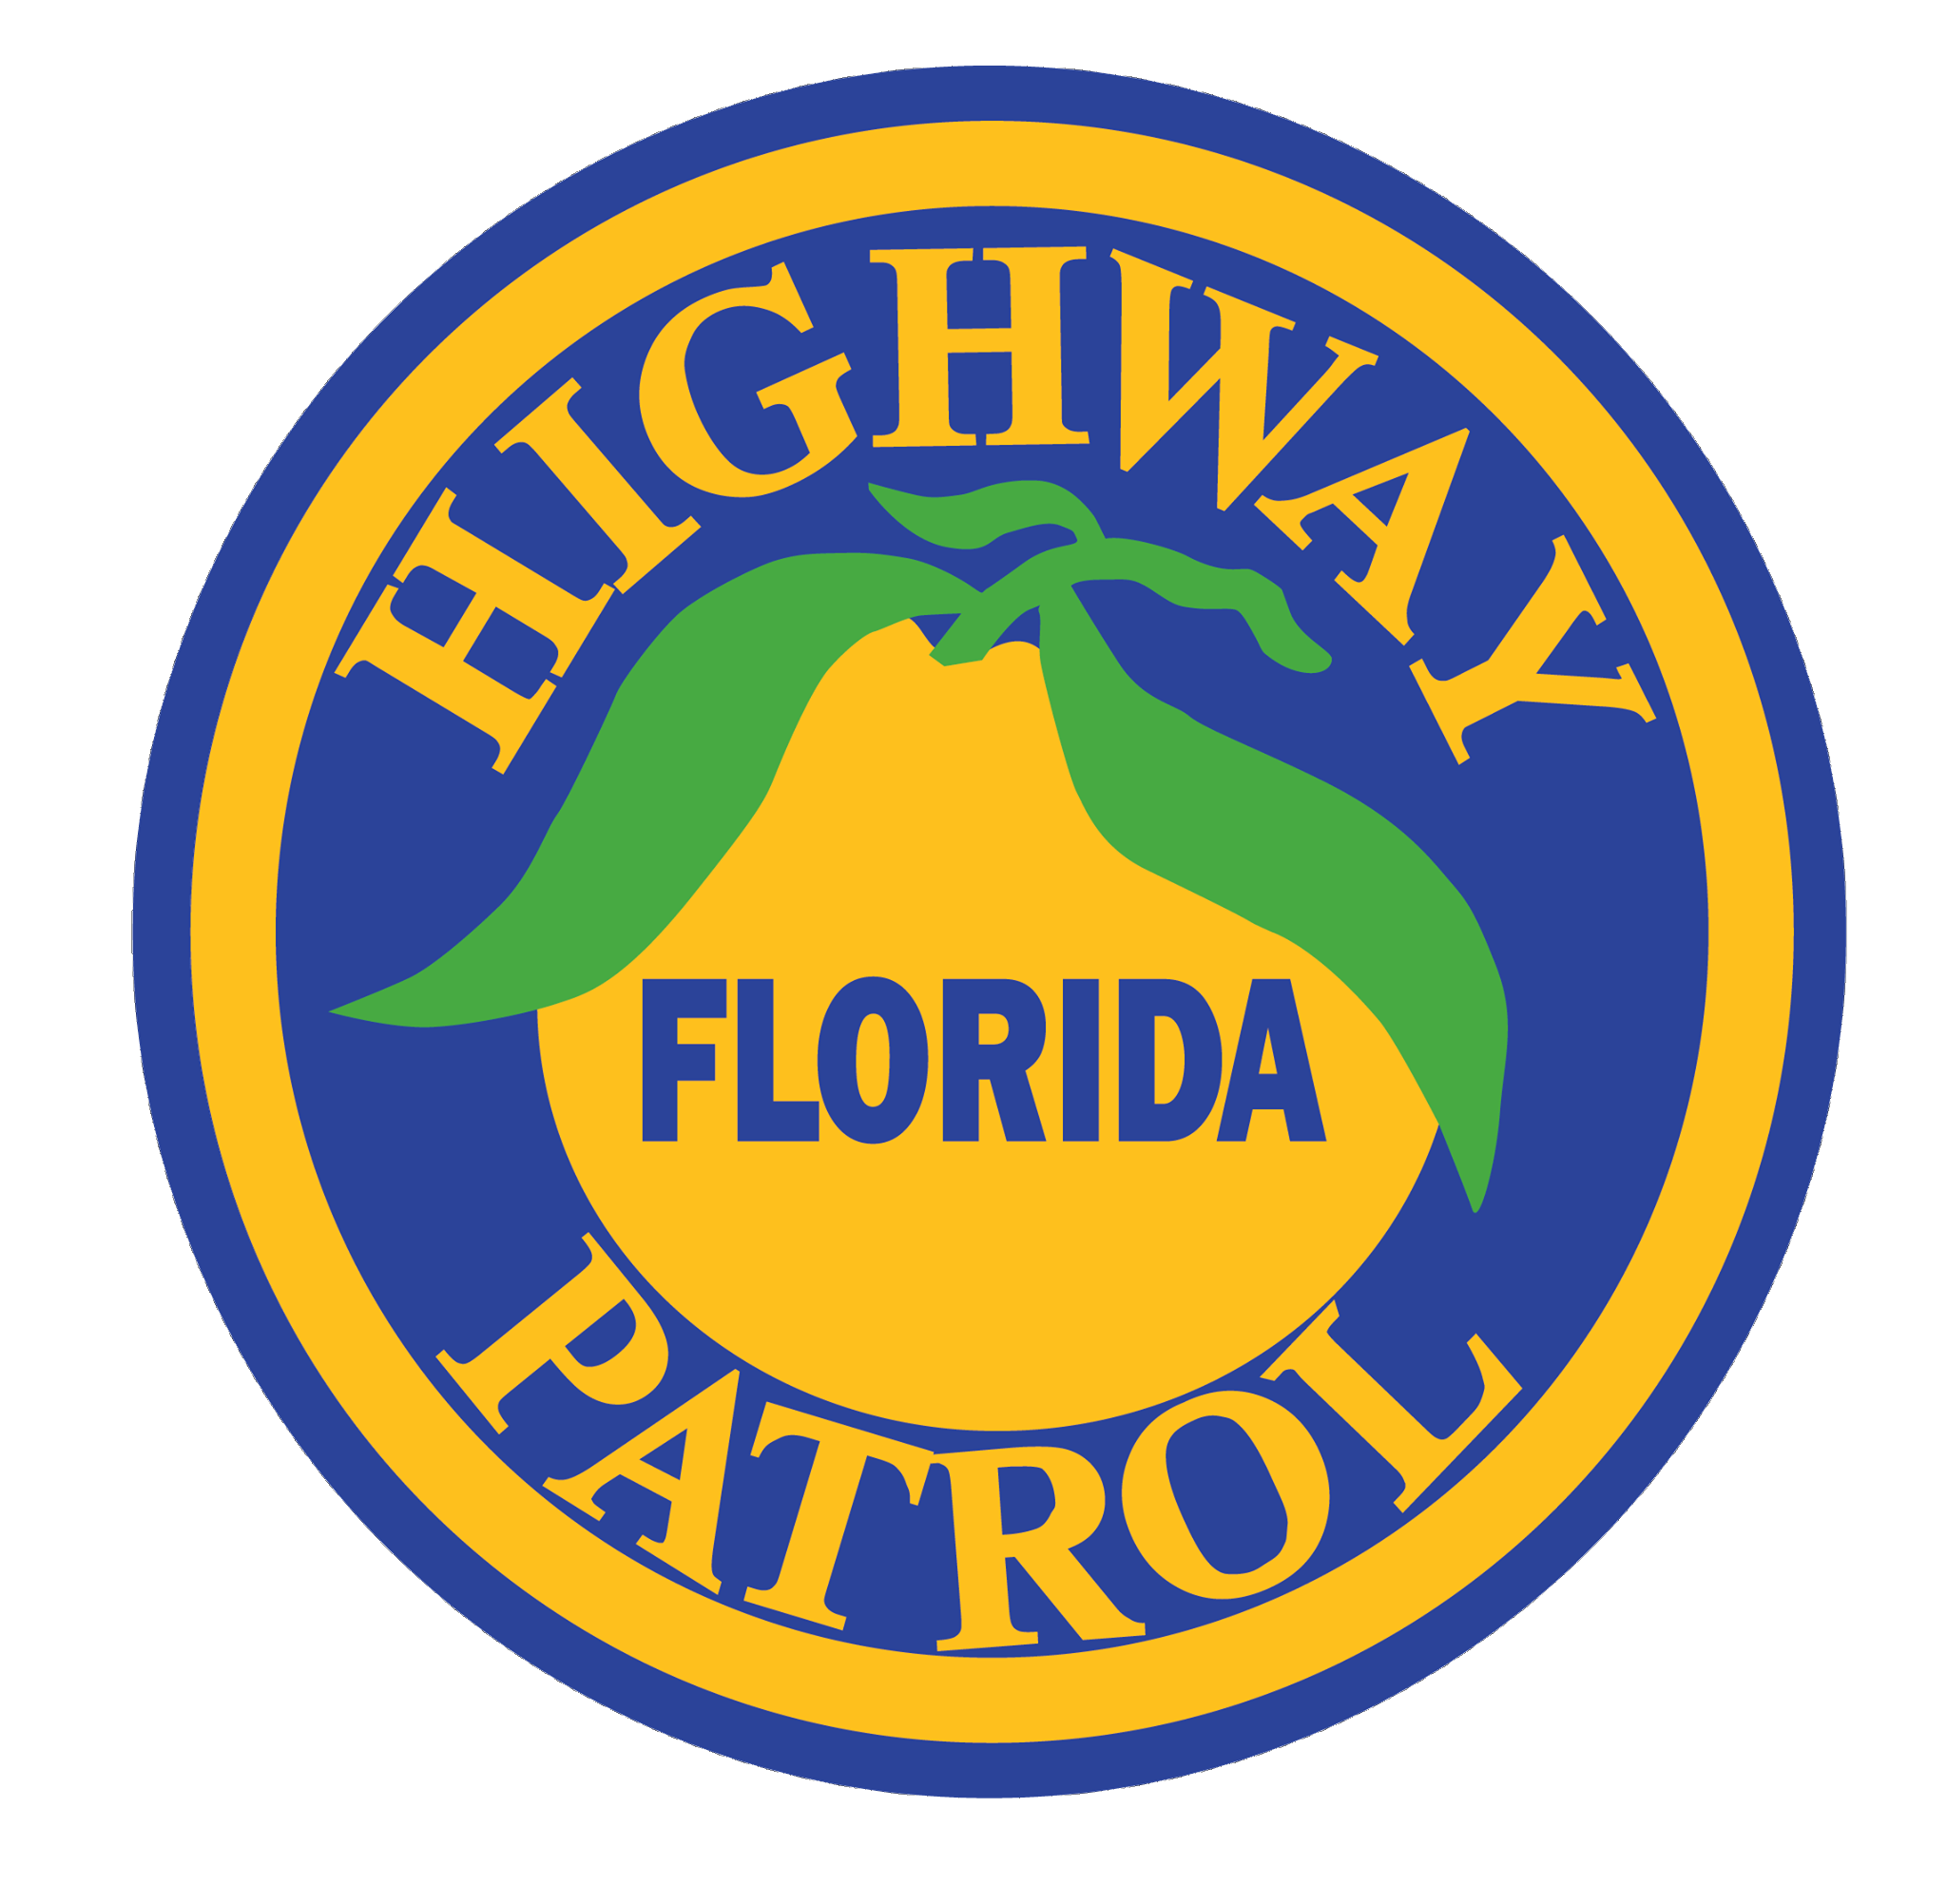 Florida HIghway Patrol logo